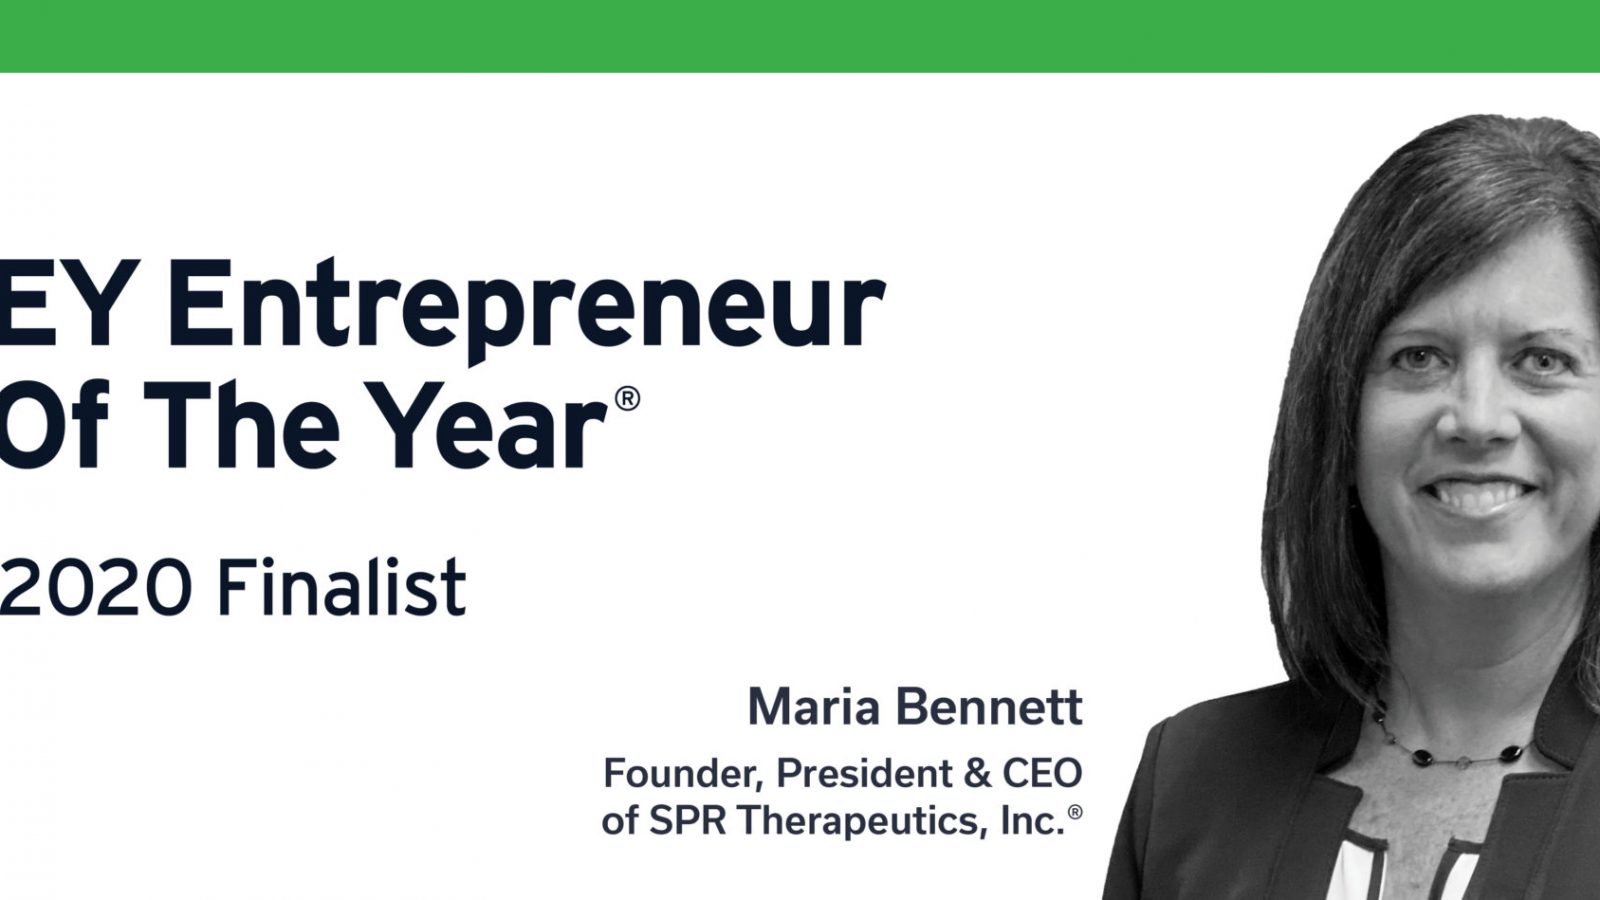 EY Entrepreneur Of the Year finalist Maria Bennett